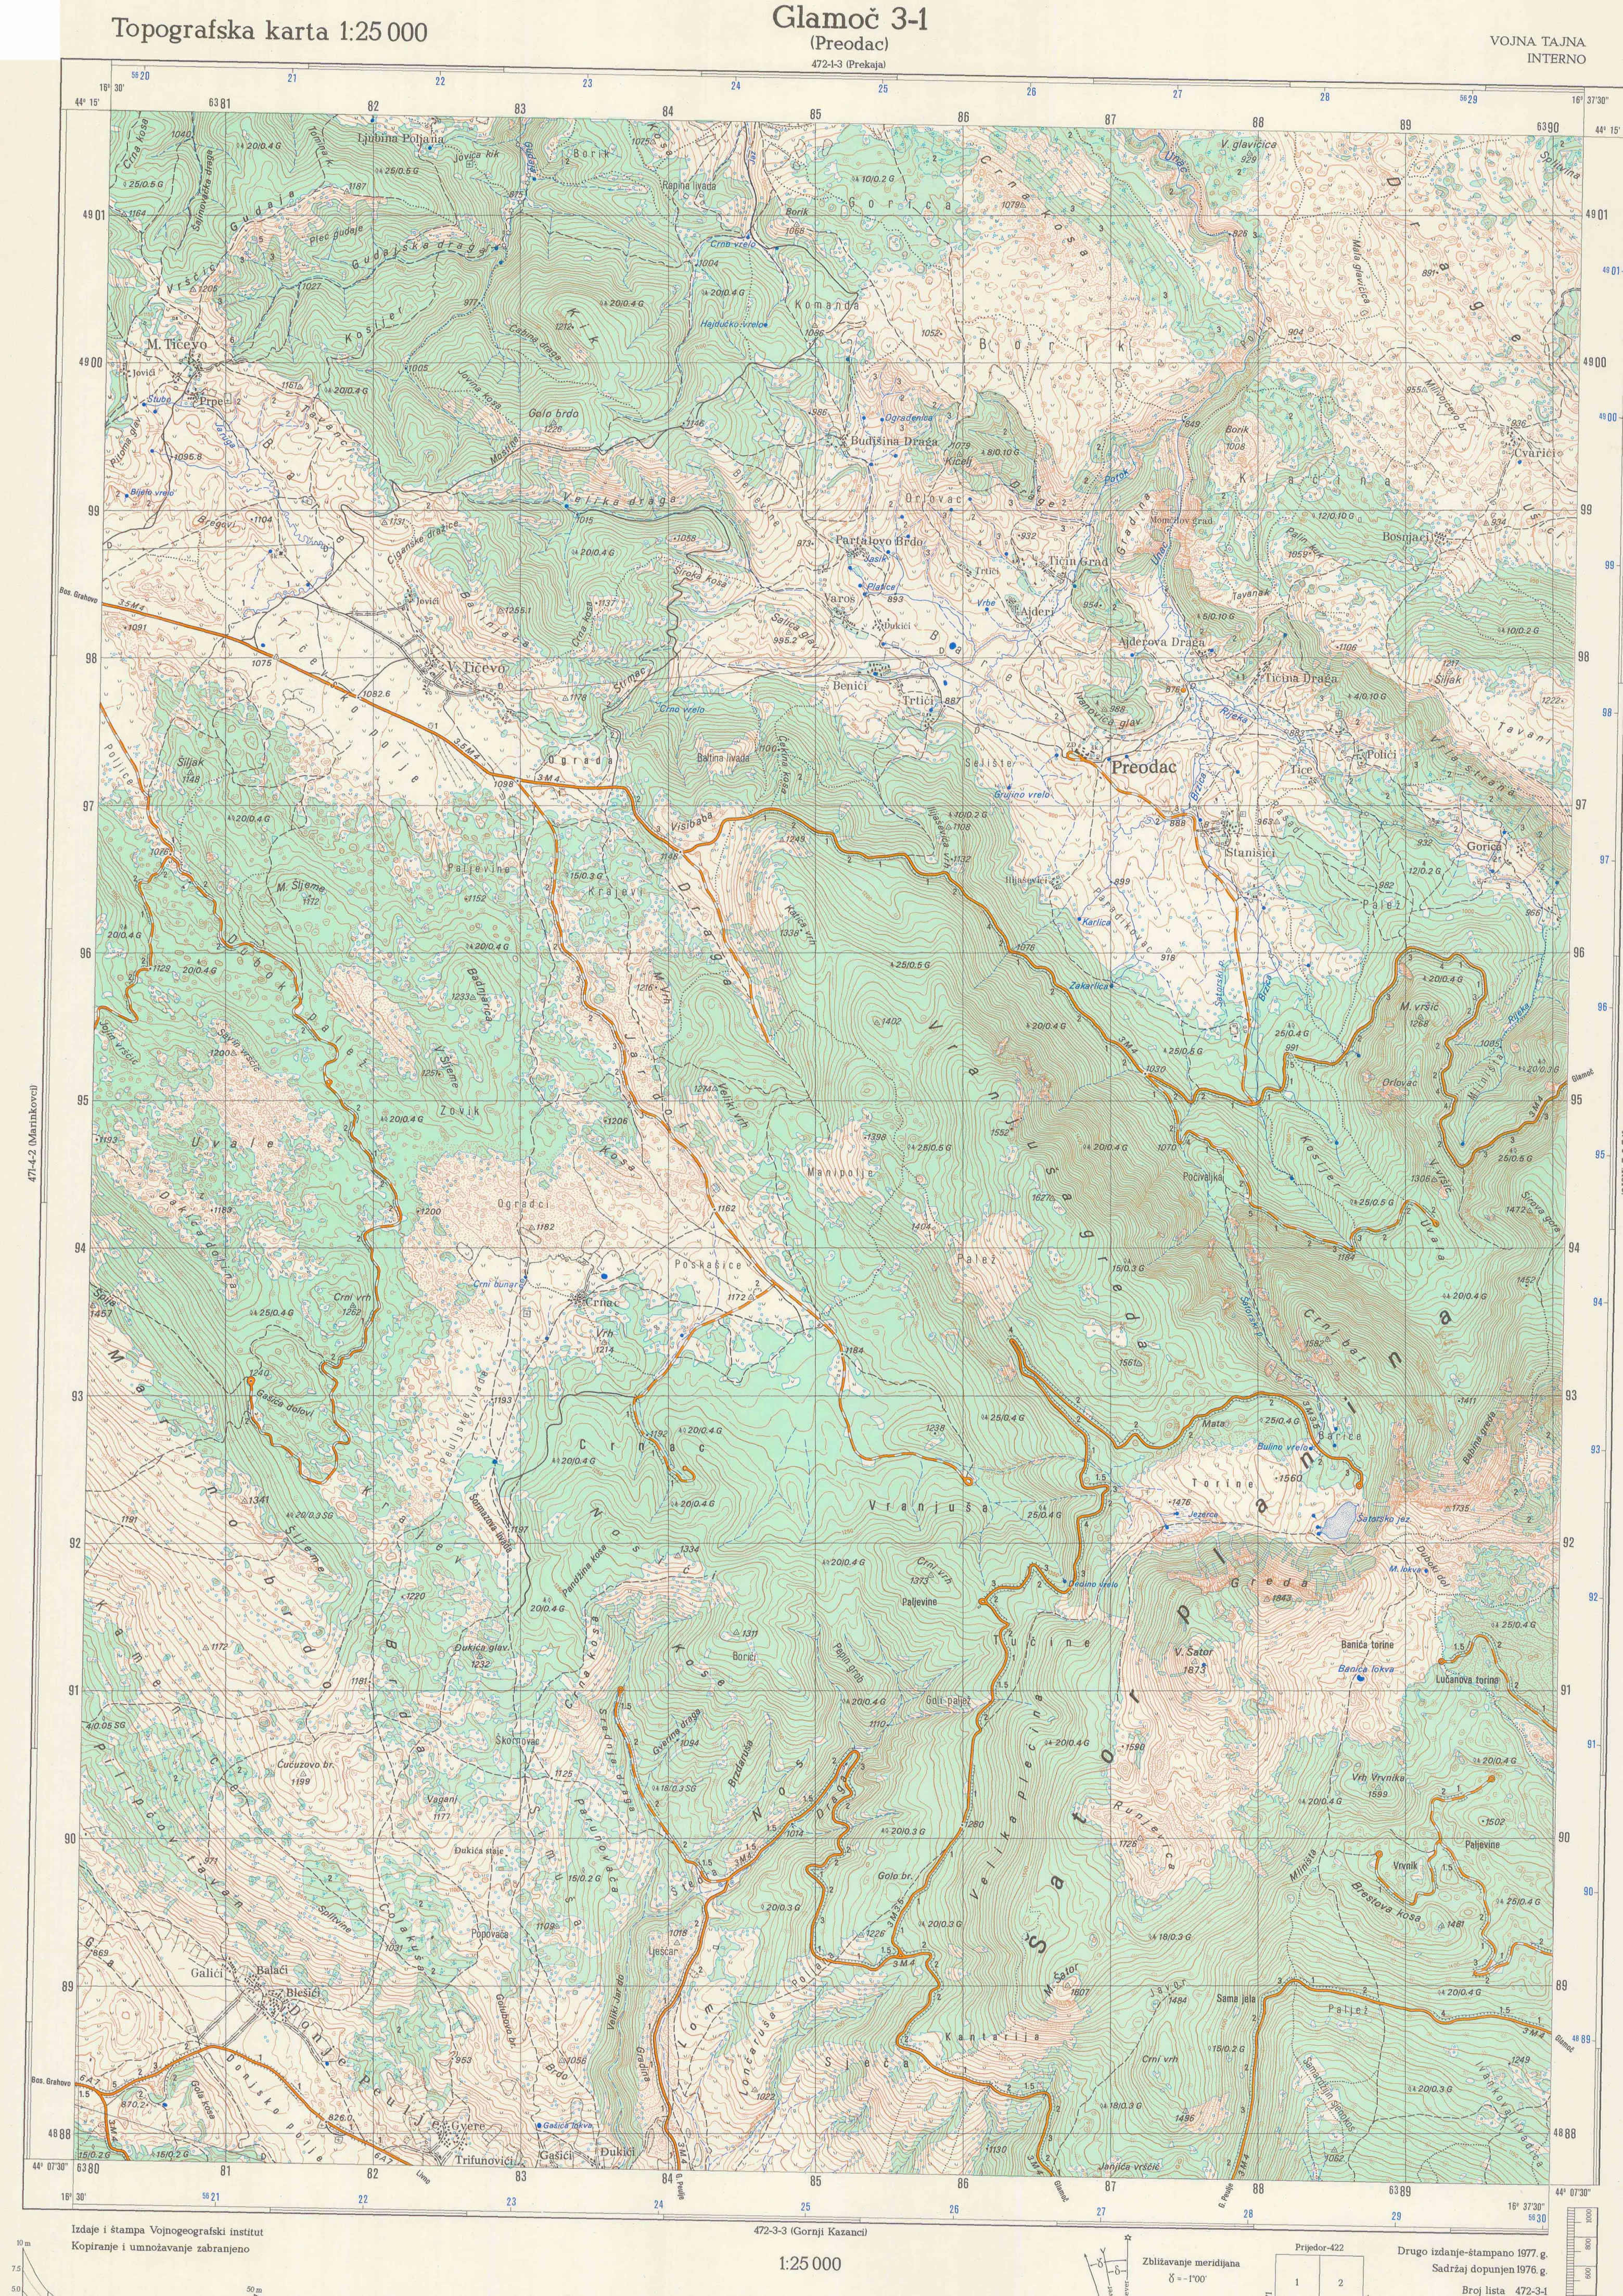  topografska karta BiH 25000 JNA  Glamoč